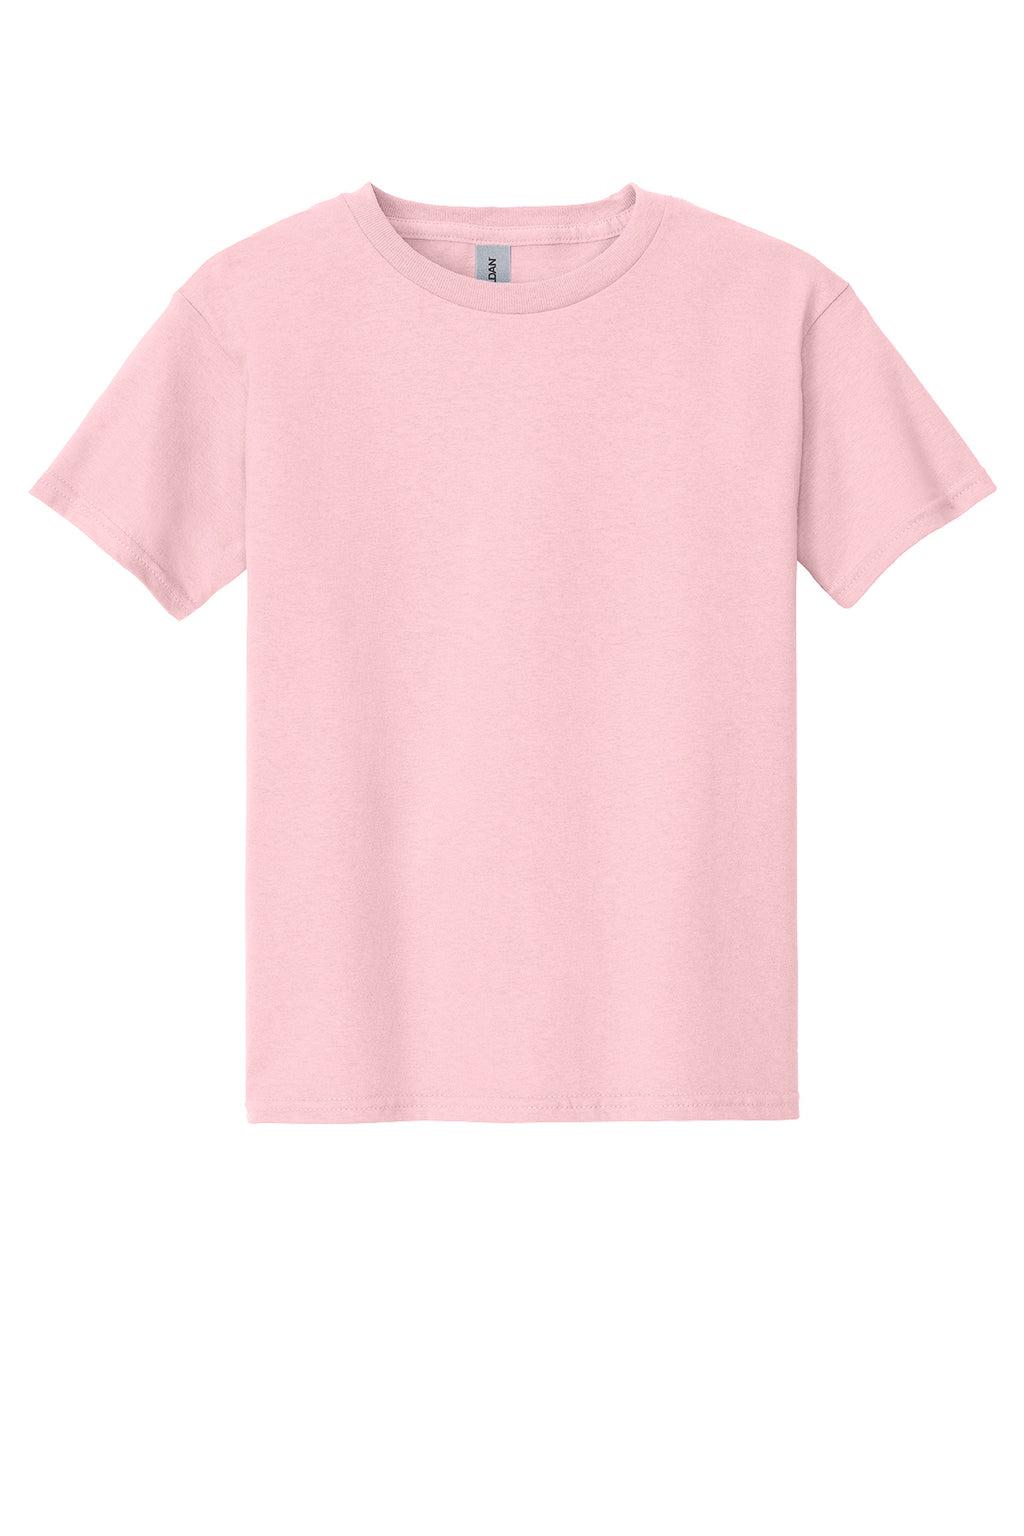 Gildan Youth S/S Shirts Light Pink